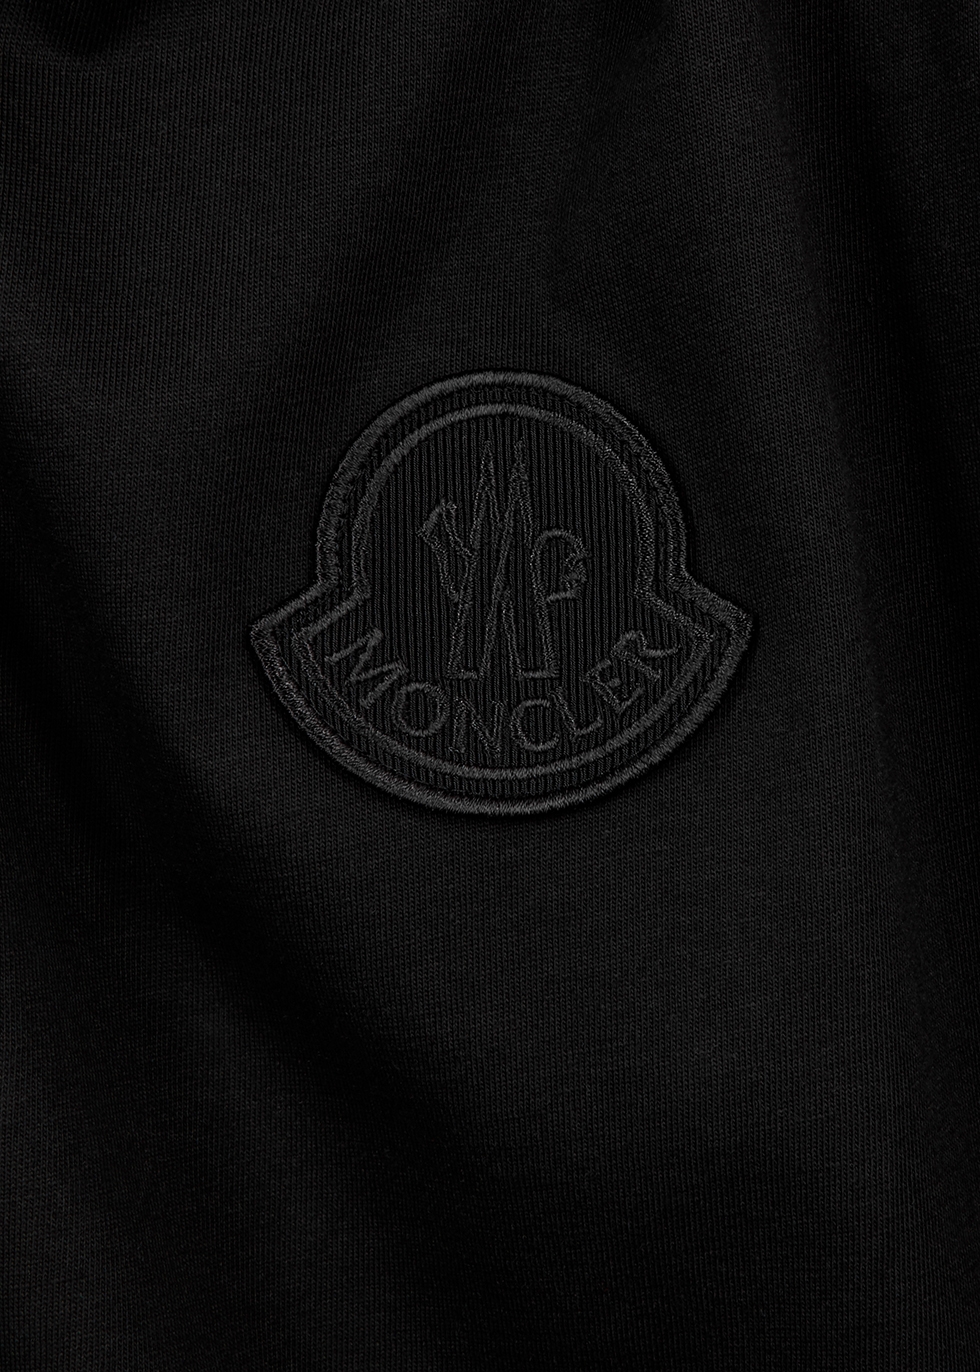 Moncler Black logo cotton T-shirt 